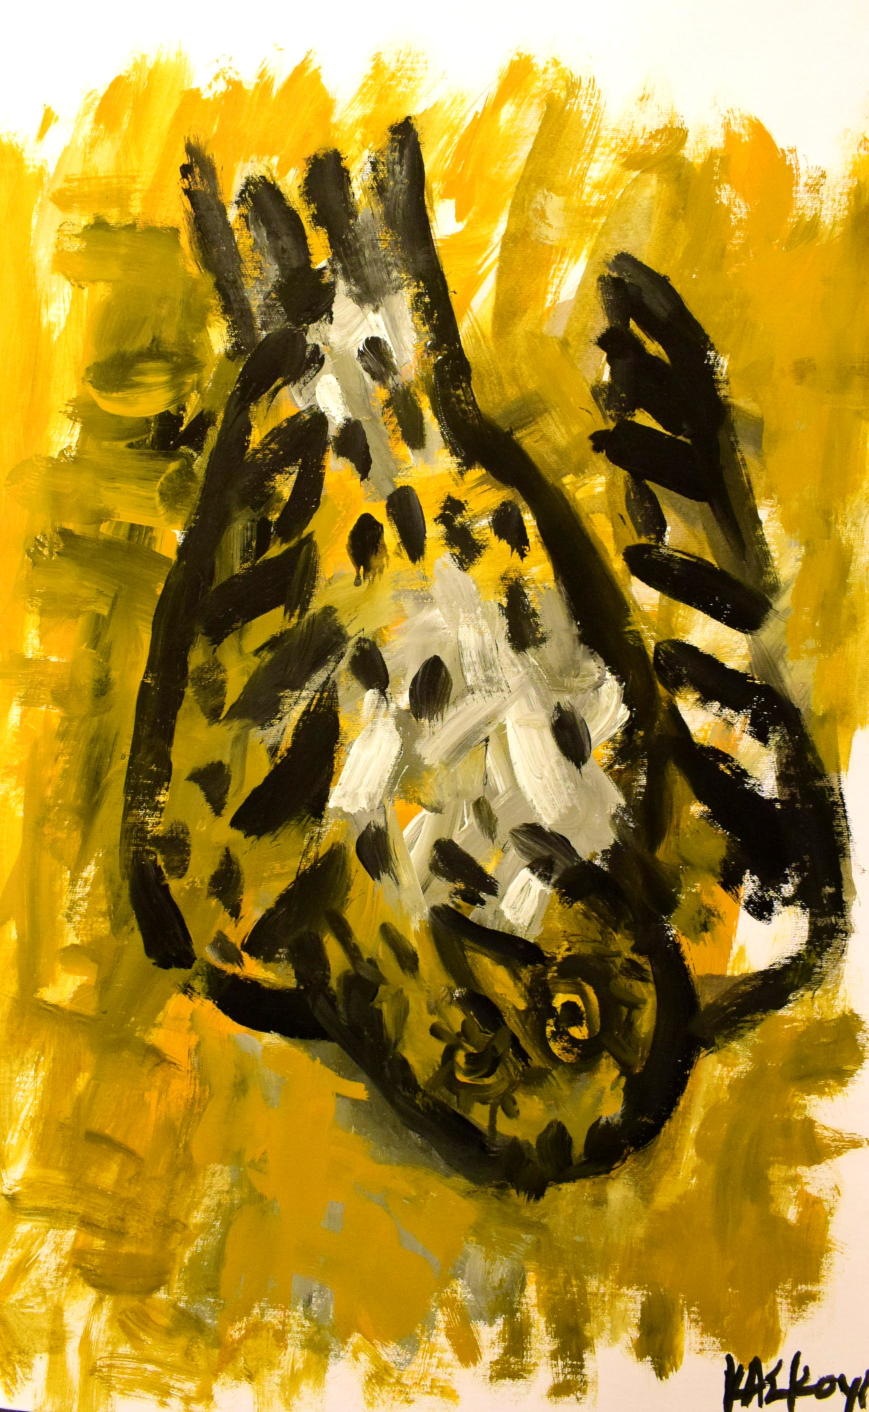 Owl, Acrylics on paper, 35 x 50 cm, 2019